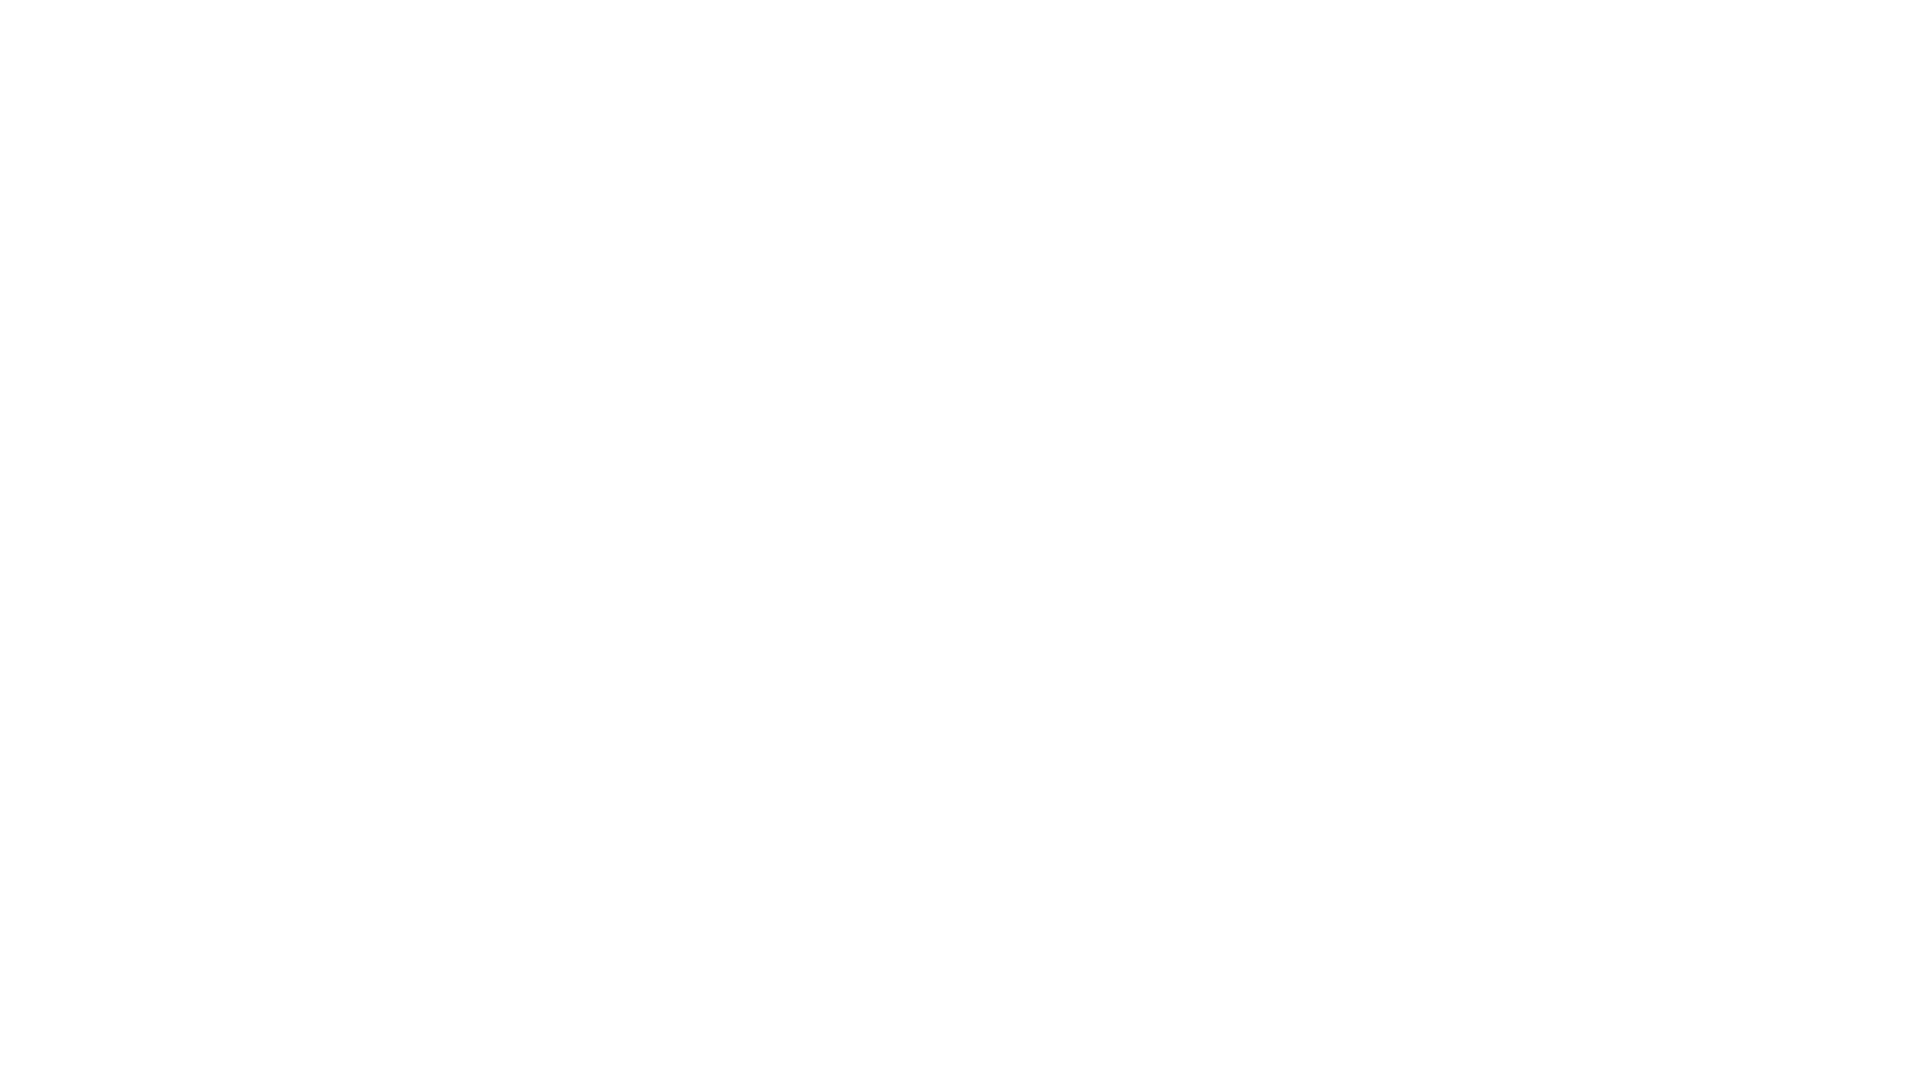 KRtheep web logo